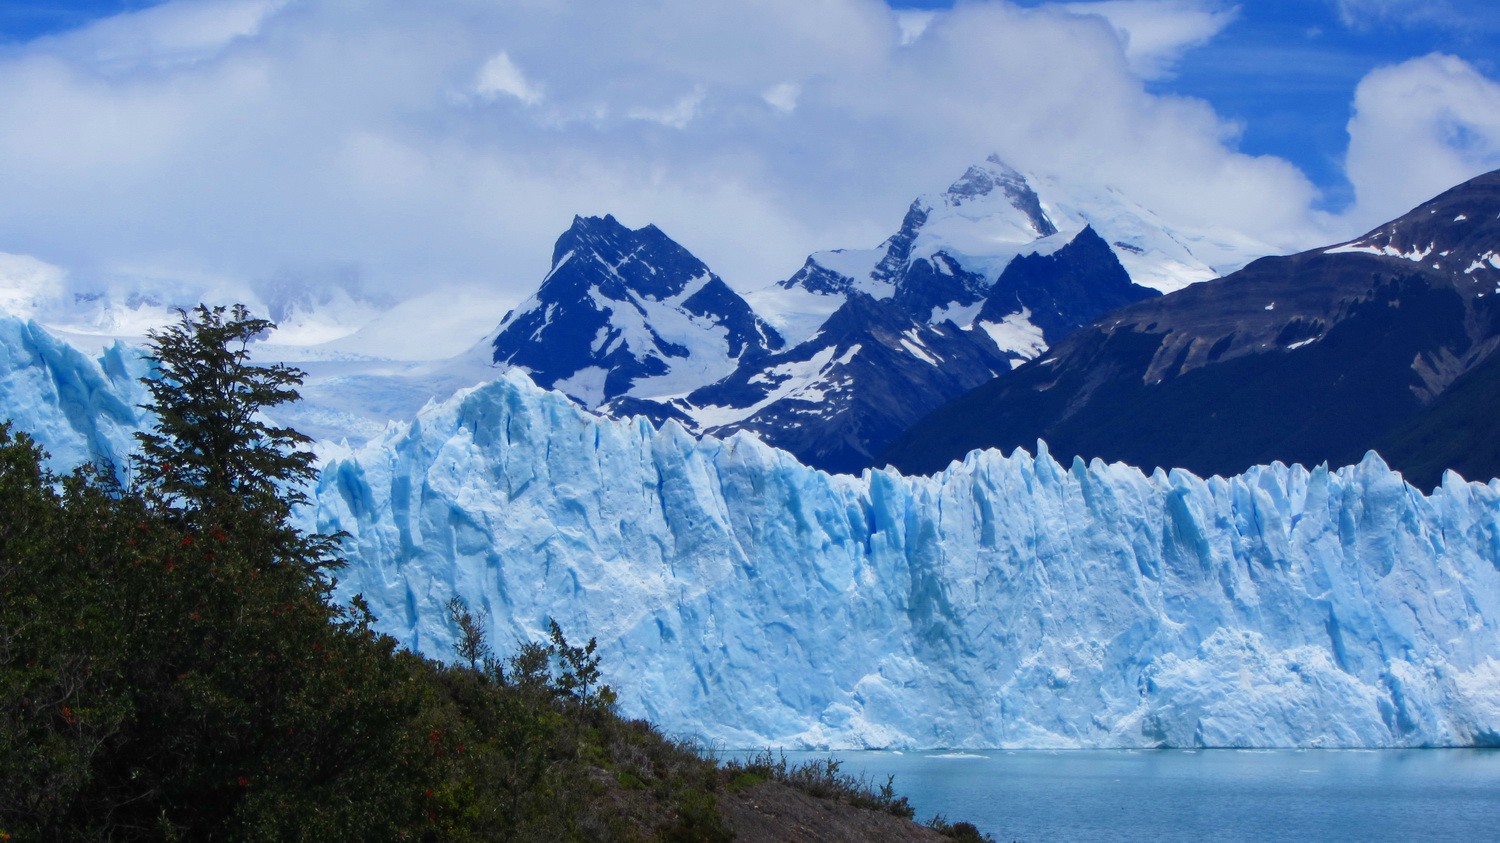 More than 60 meter high glacier front